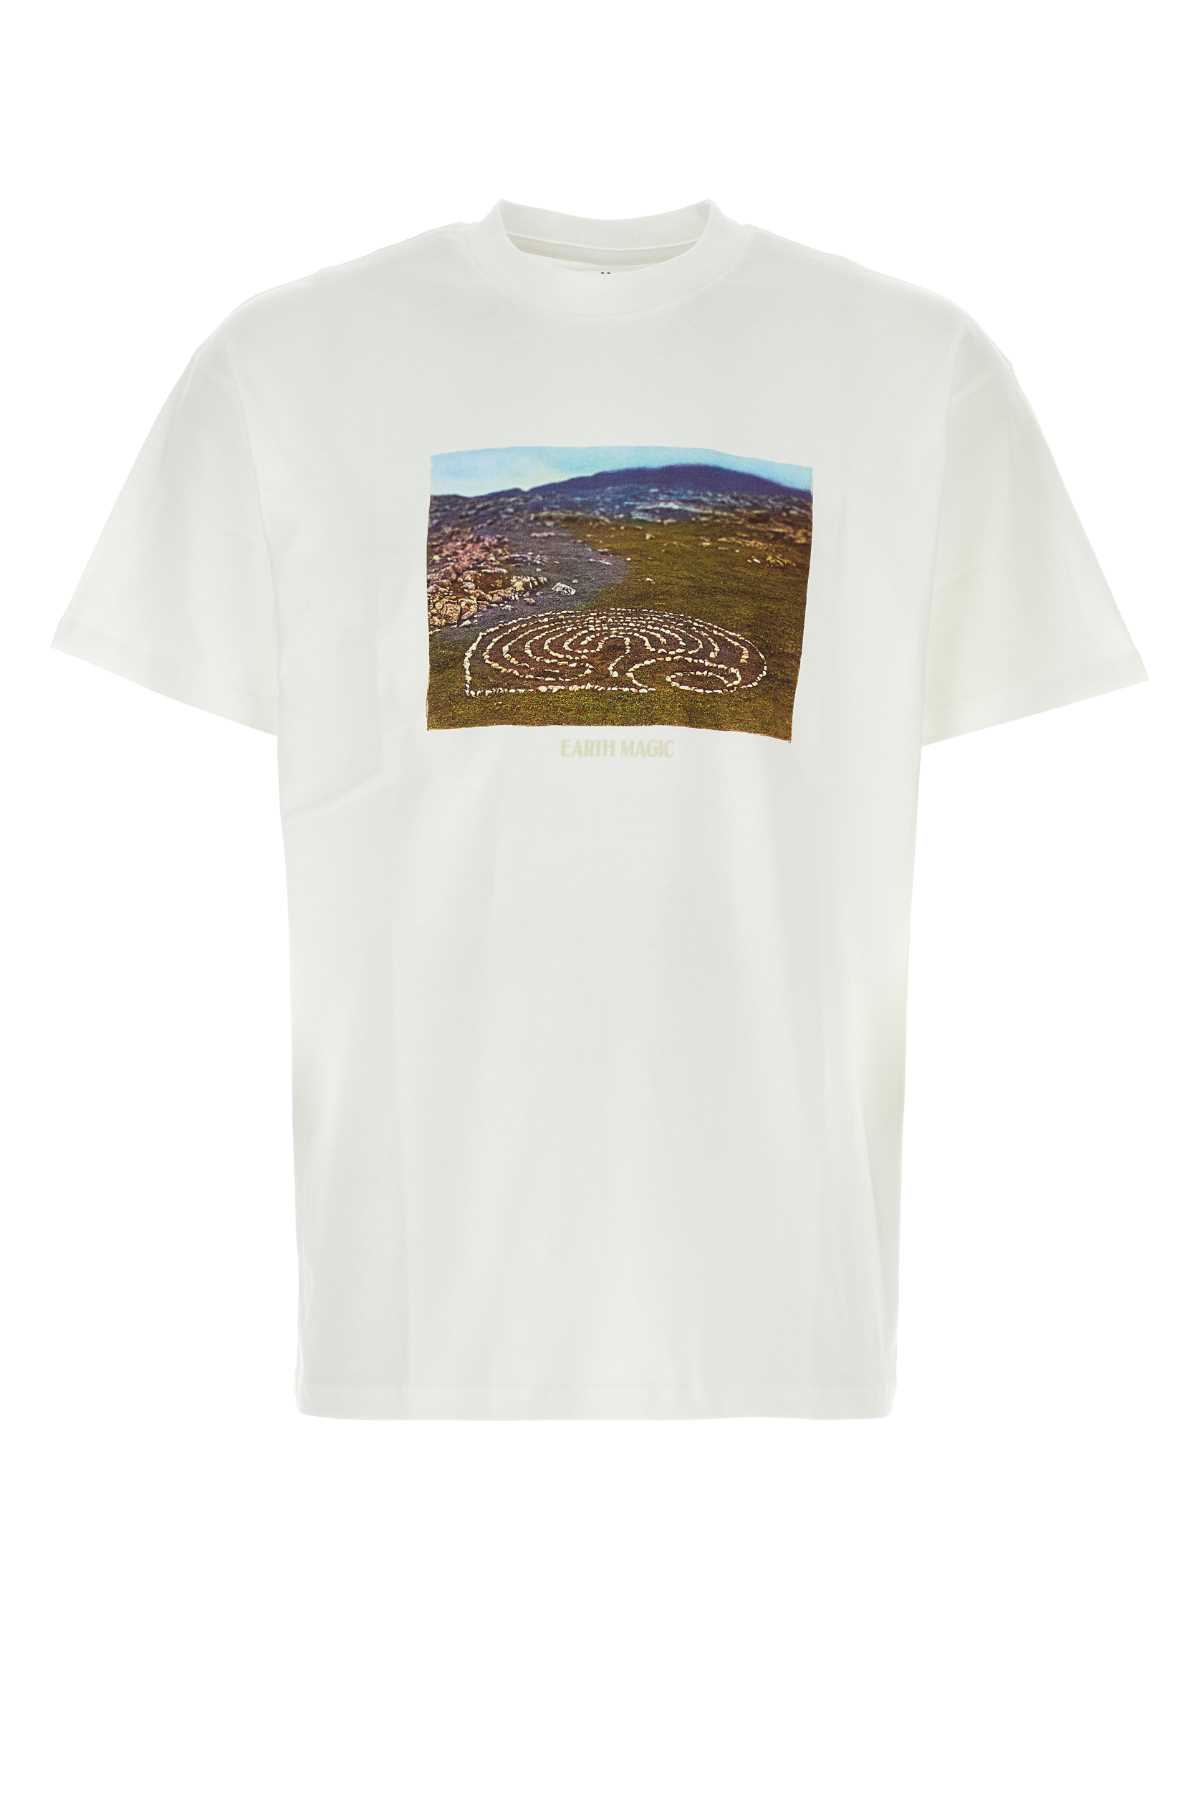 Shop Carhartt White Cotton S/s Earth Magic T-shirt In Zeus